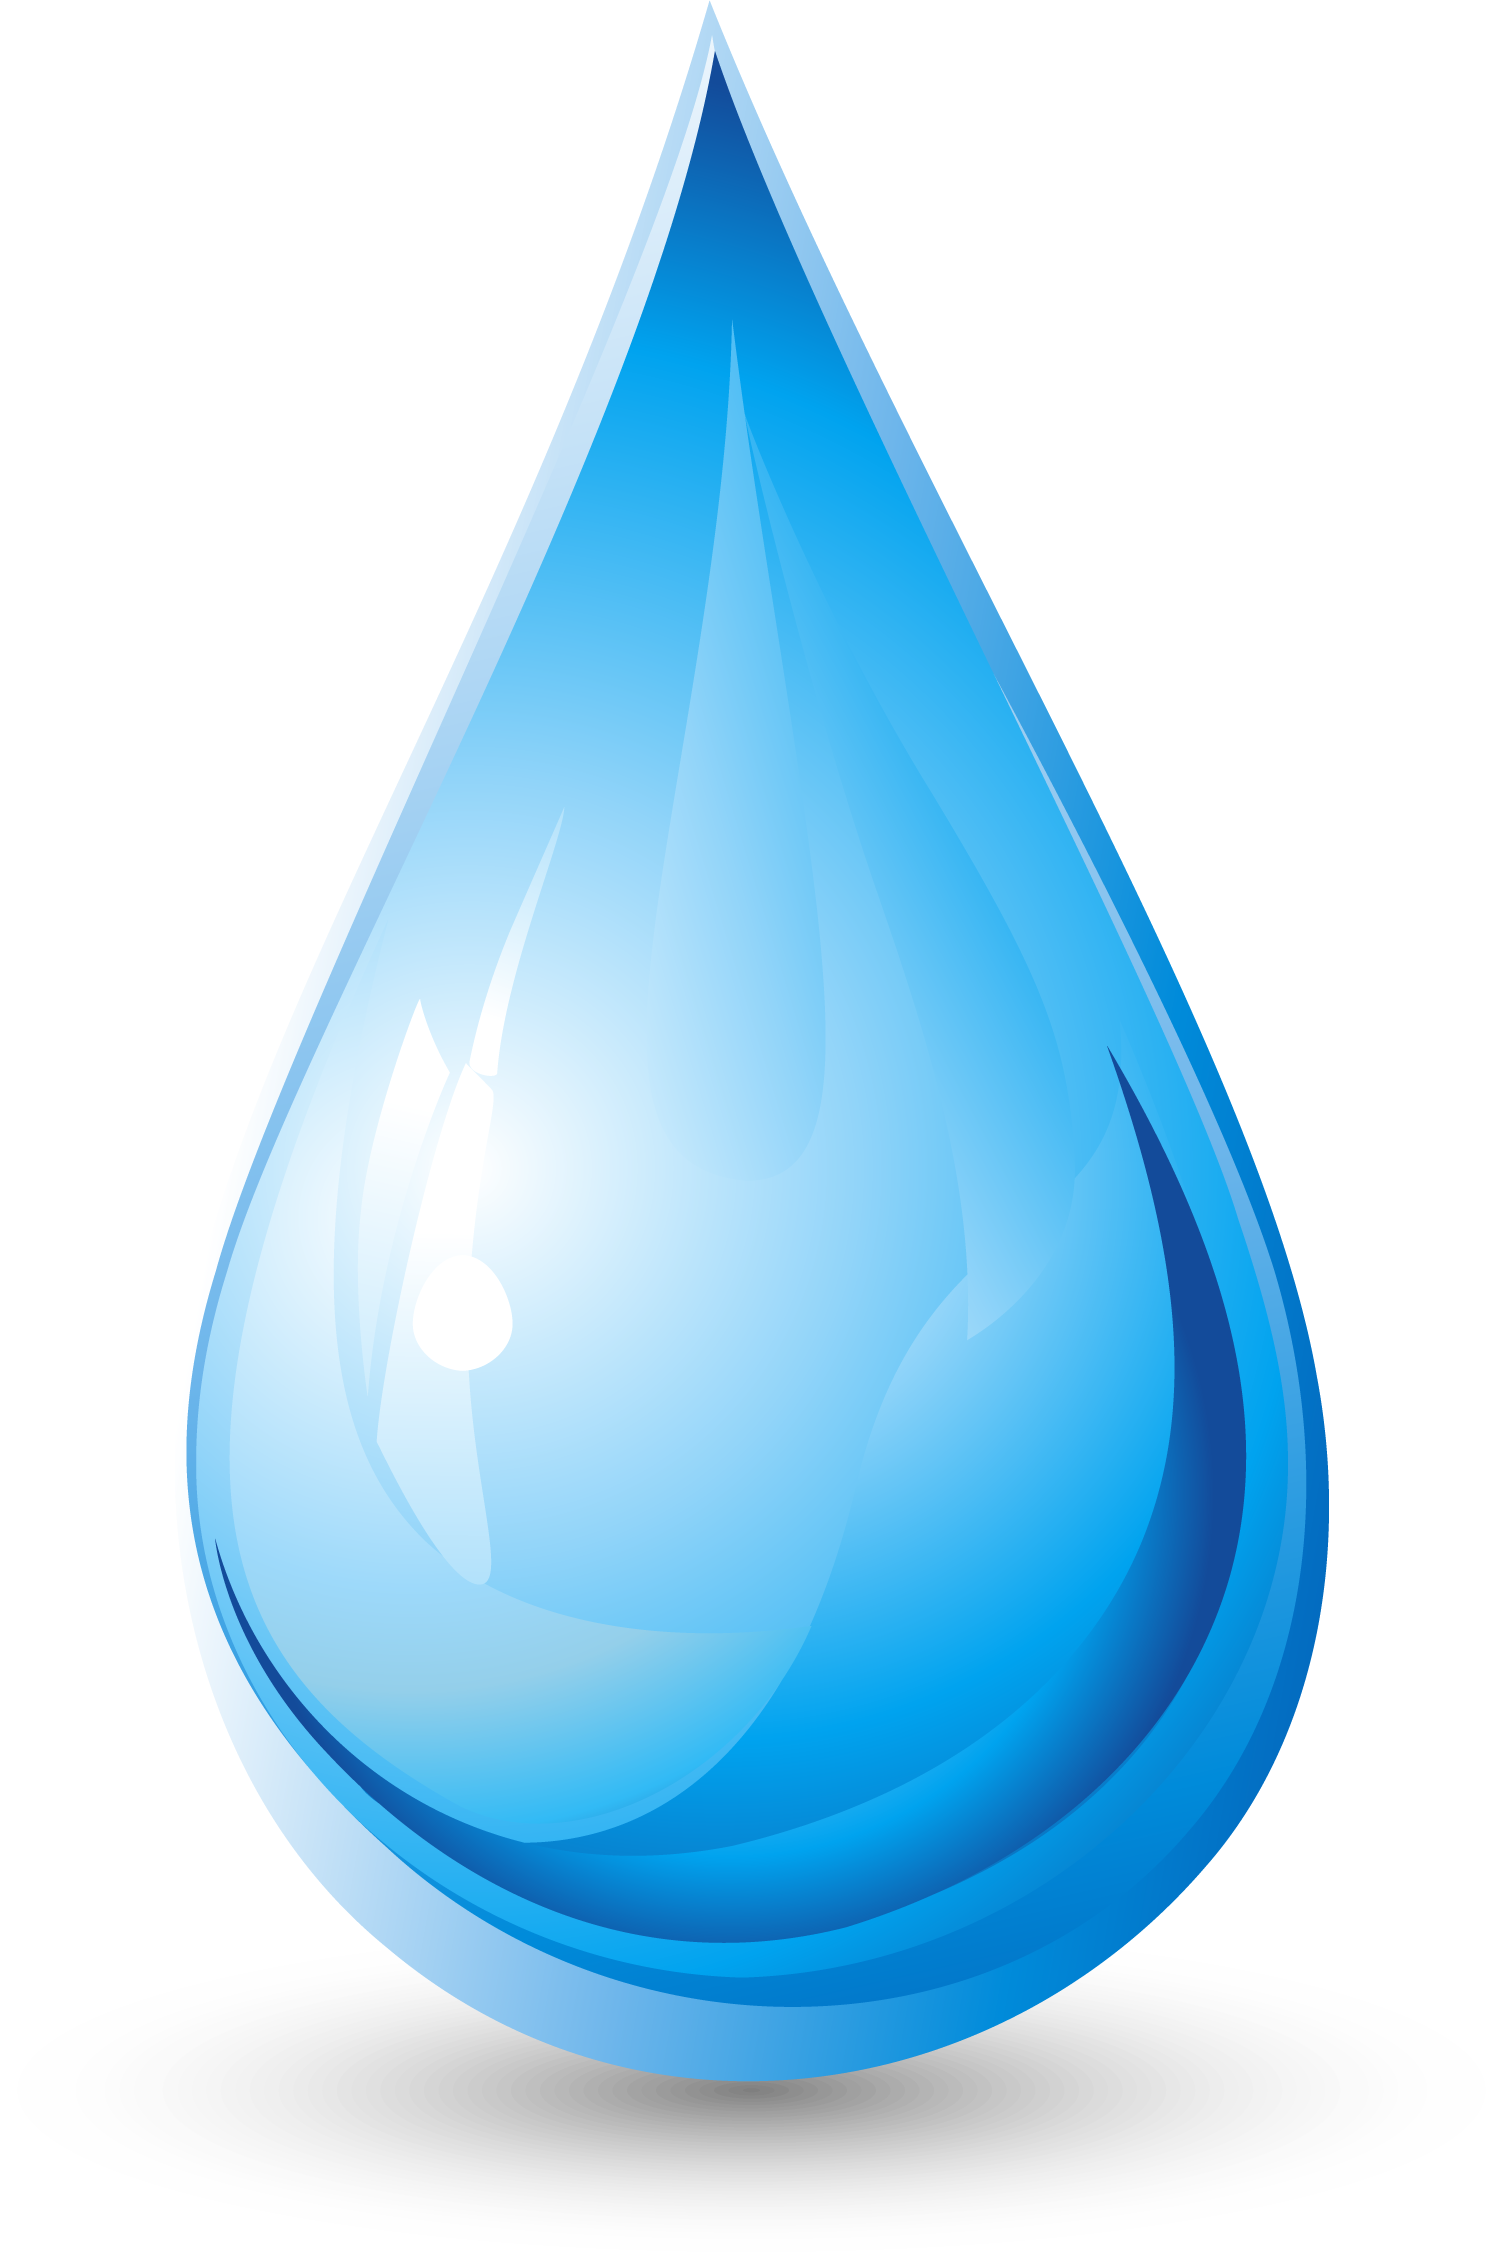 Download Vector Of Drop Water-Drop Water Free Download Image HQ PNG